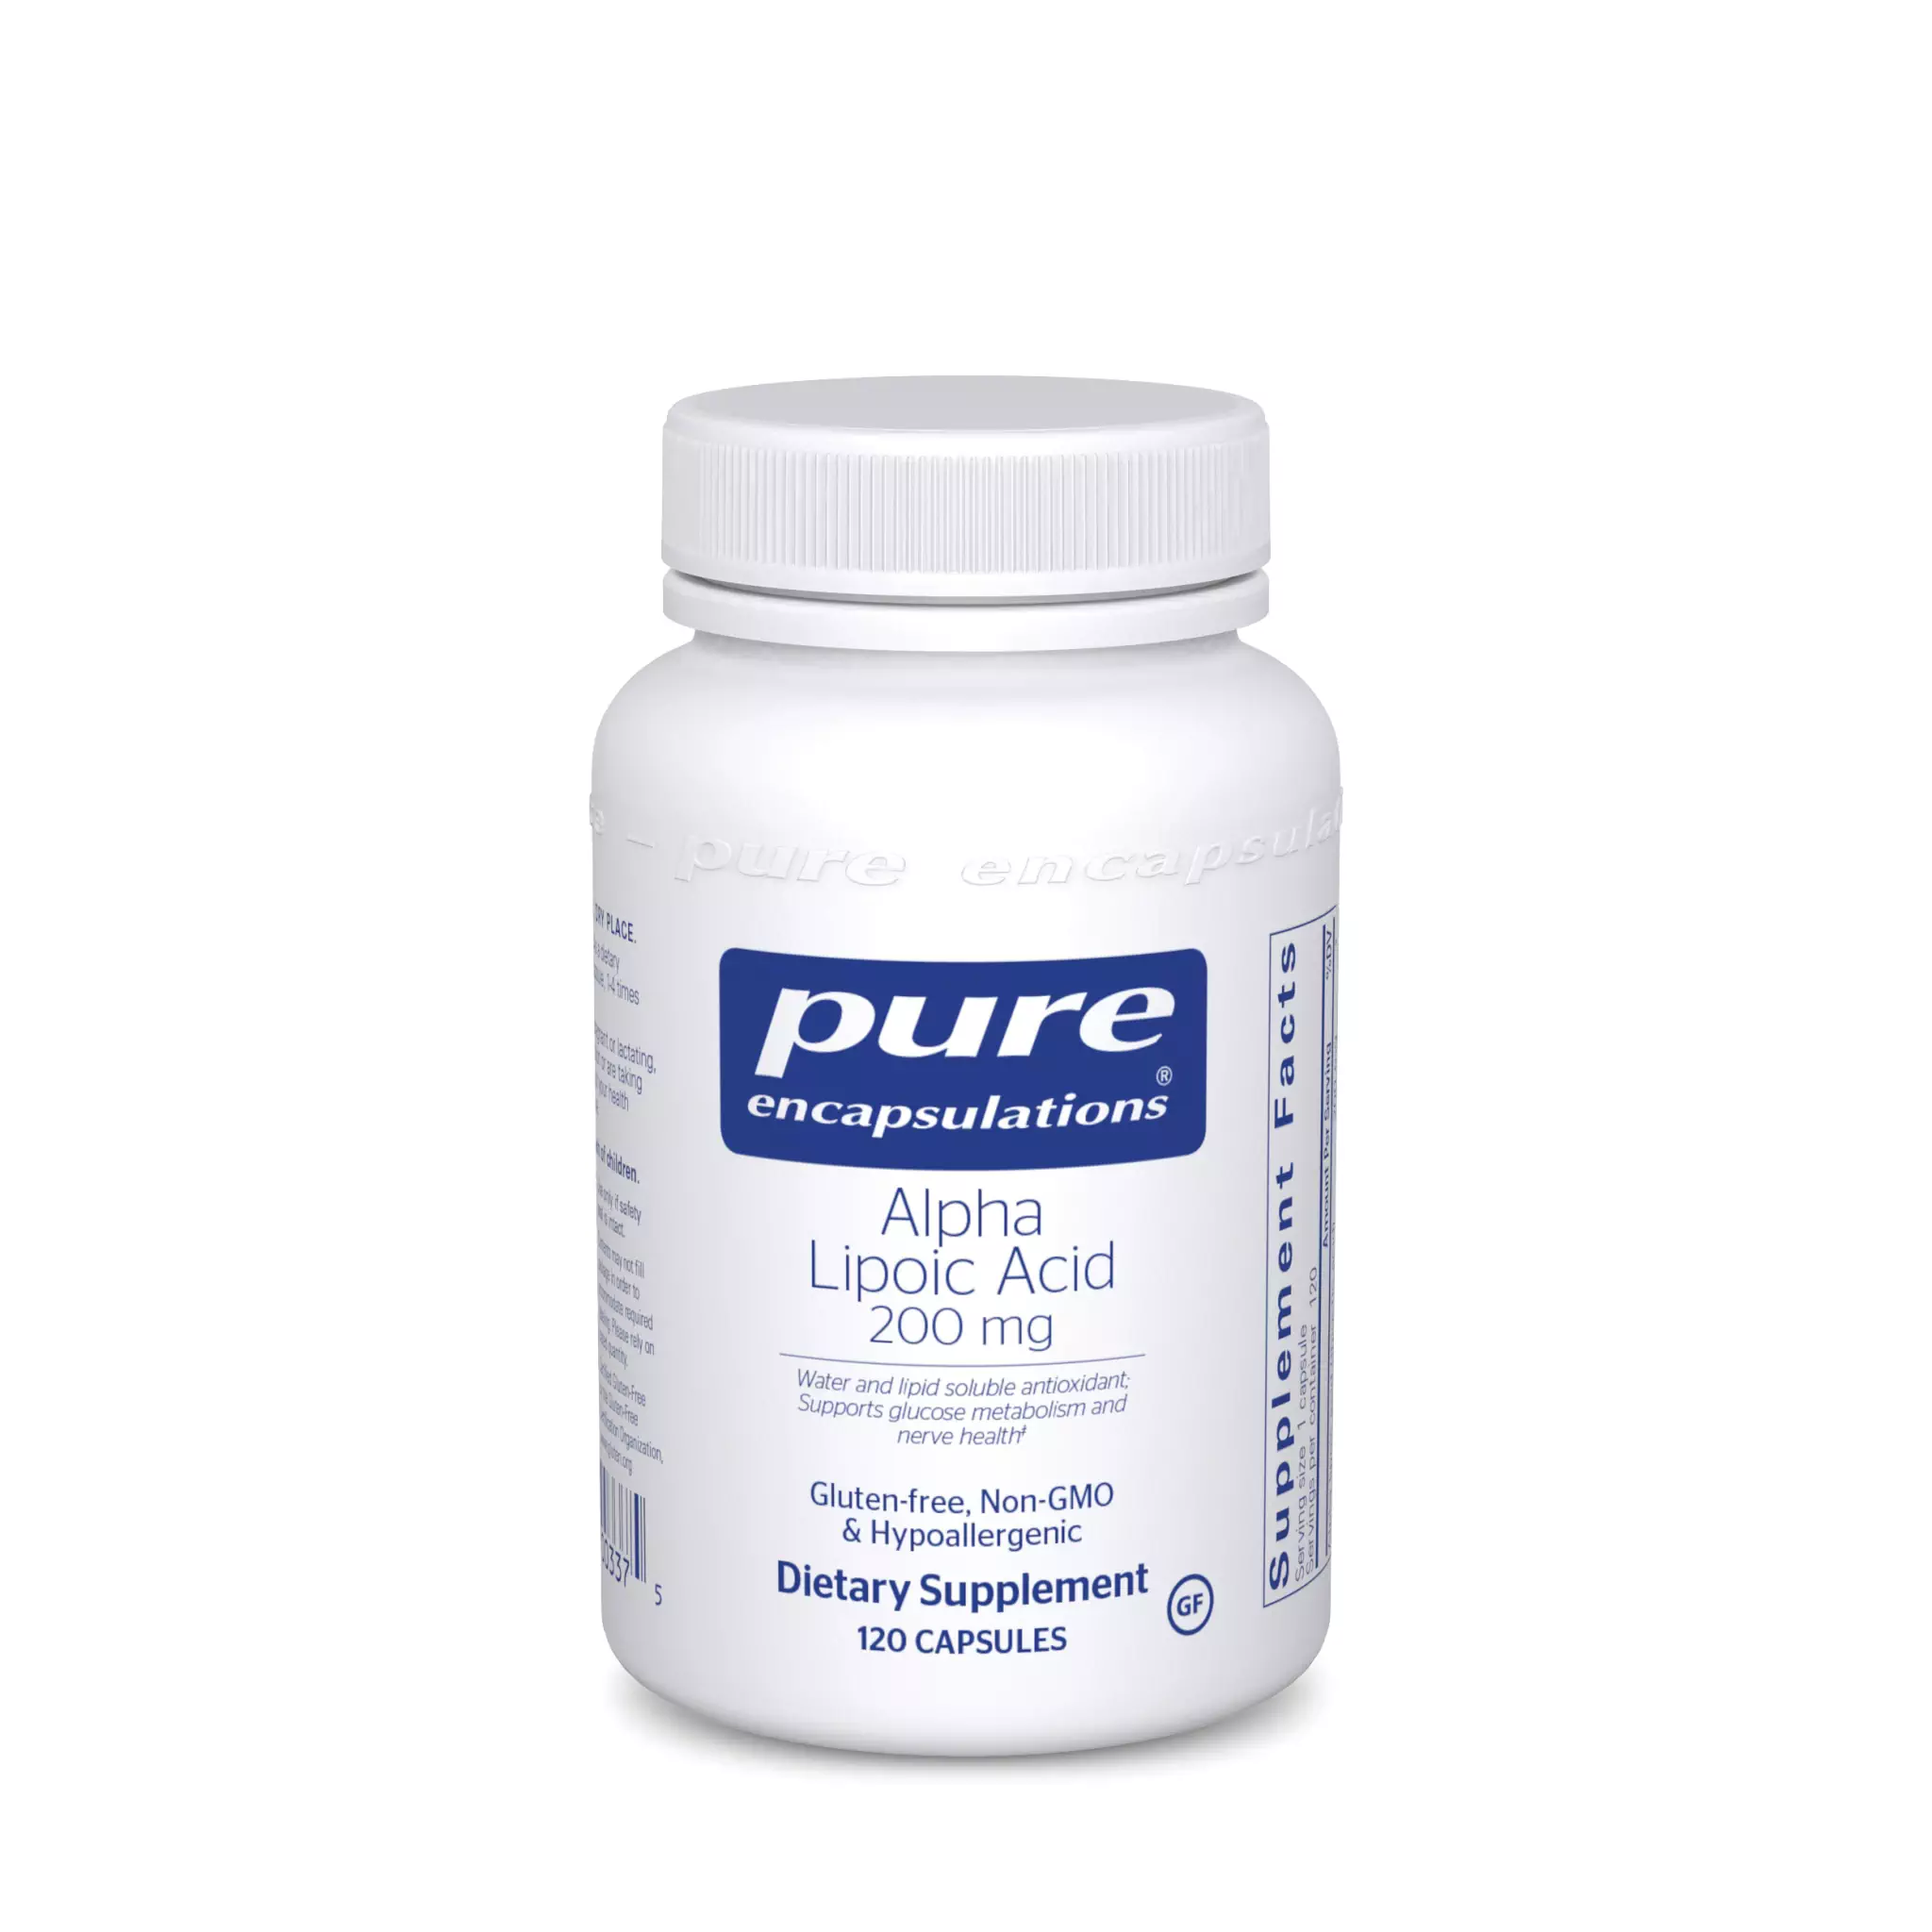 Pure Encapsulations - Lipoic Acid 200 mg Alpha